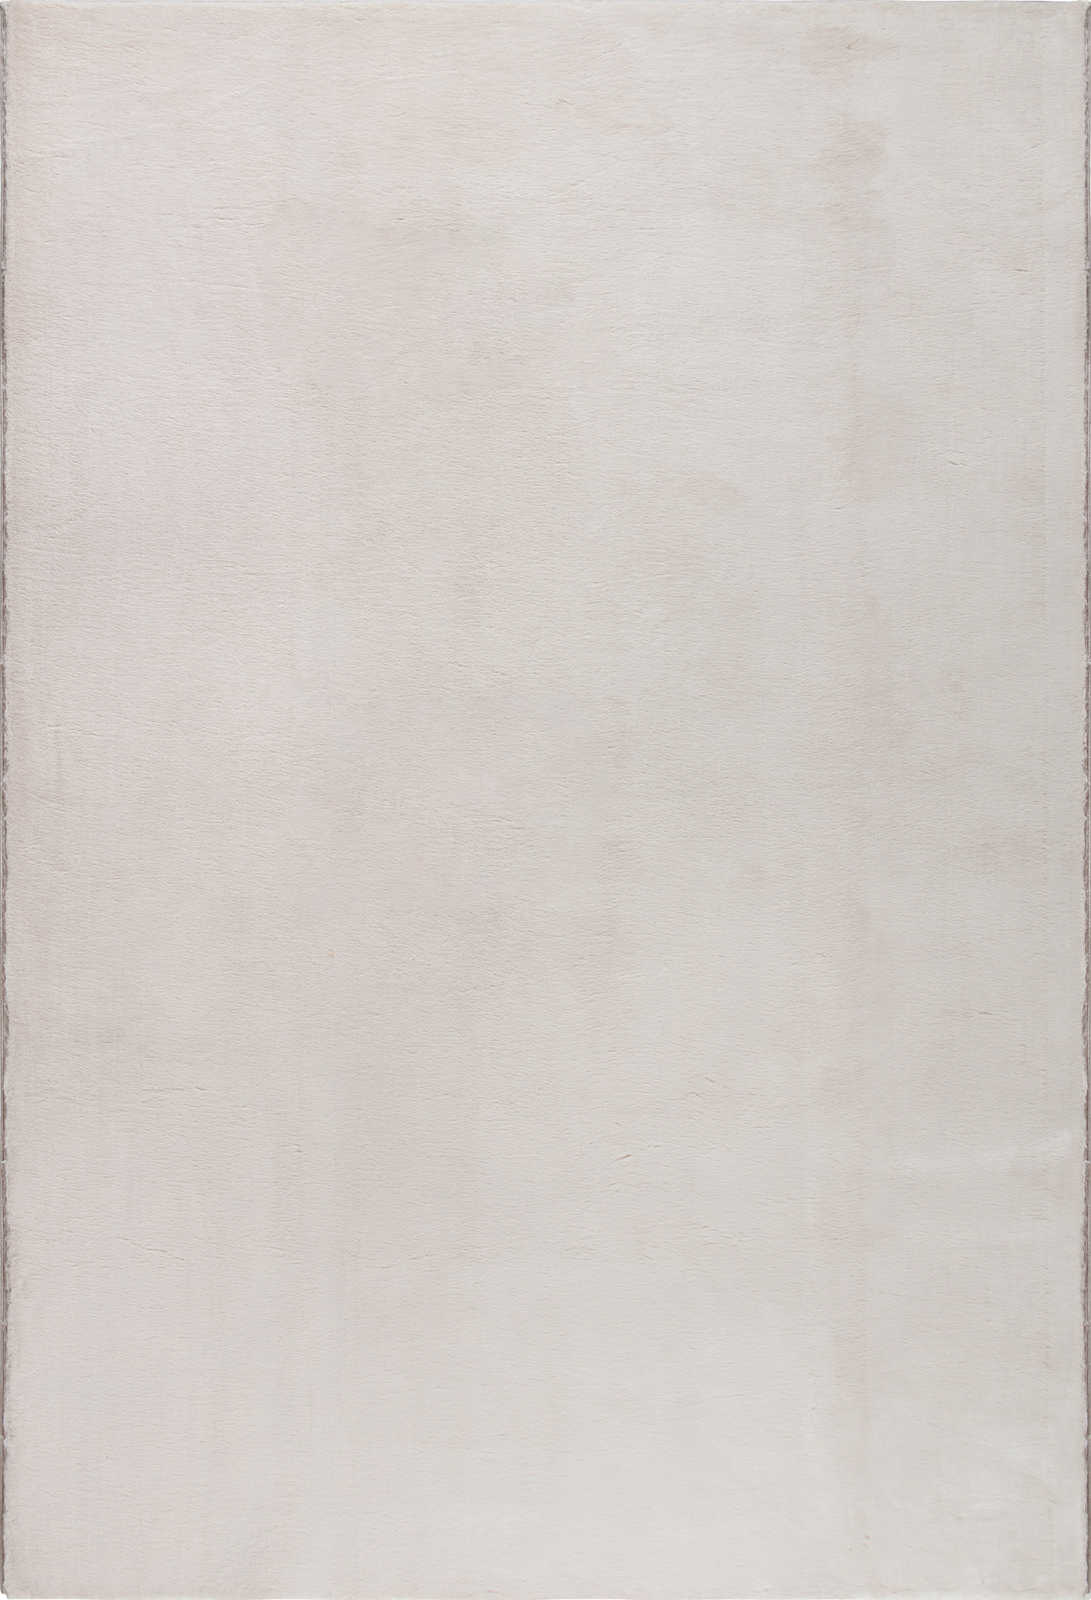             Knuffelzacht hoogpolig tapijt in lichtbeige - 110 x 60 cm
        